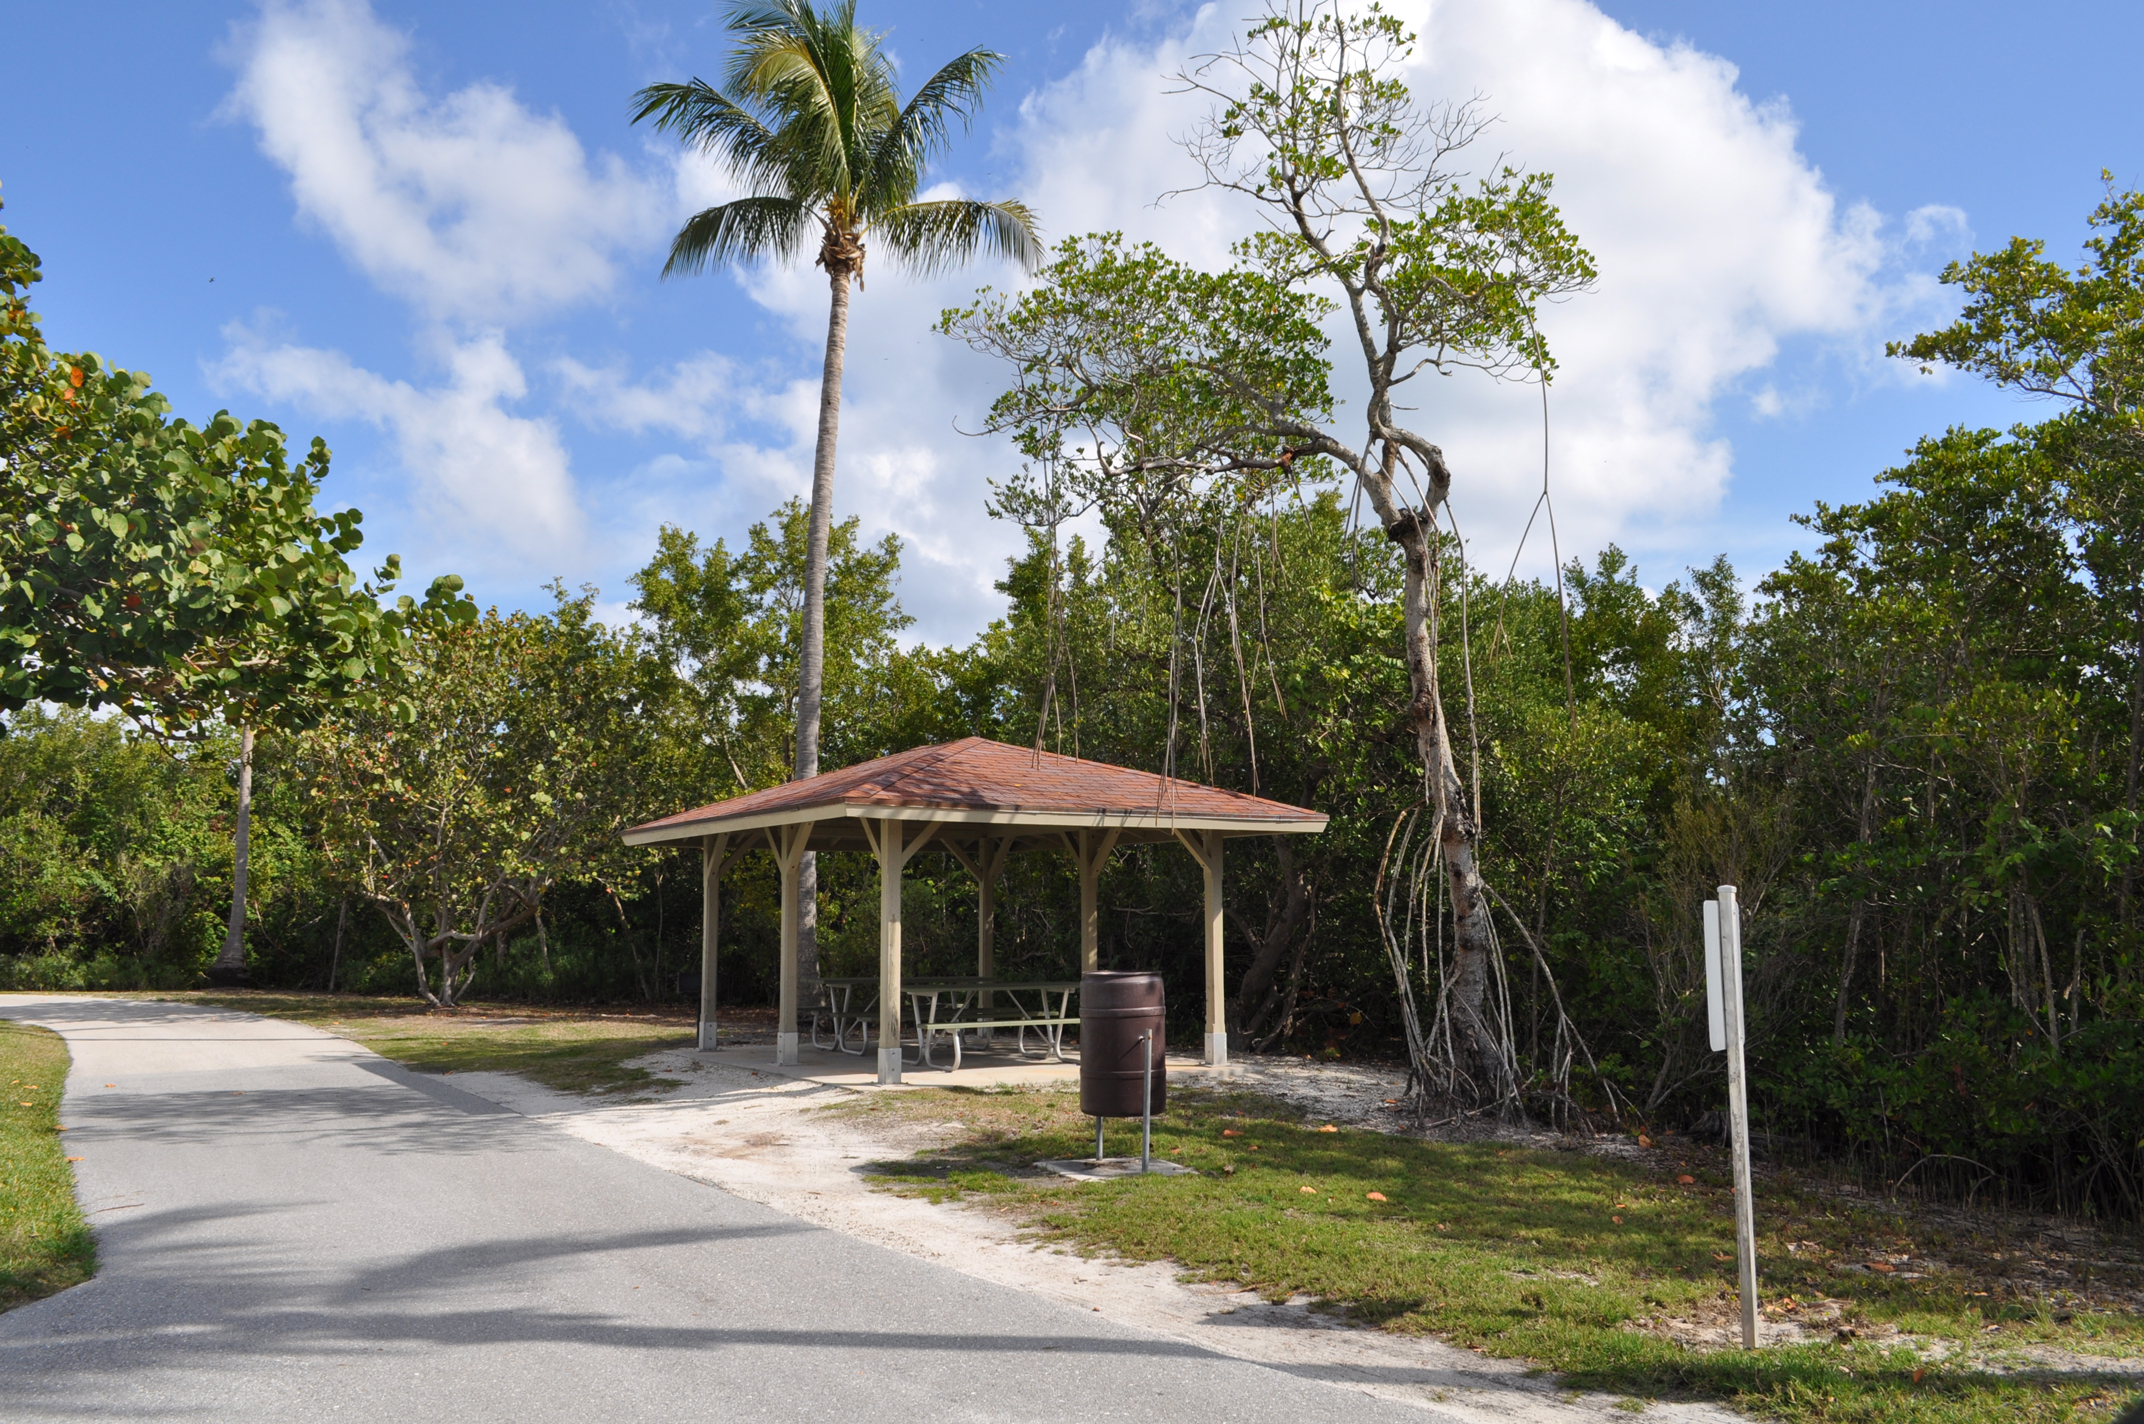 Burt Reynolds Park Palm Beach County Florida Picnic Shelter and Mangrove.JPG